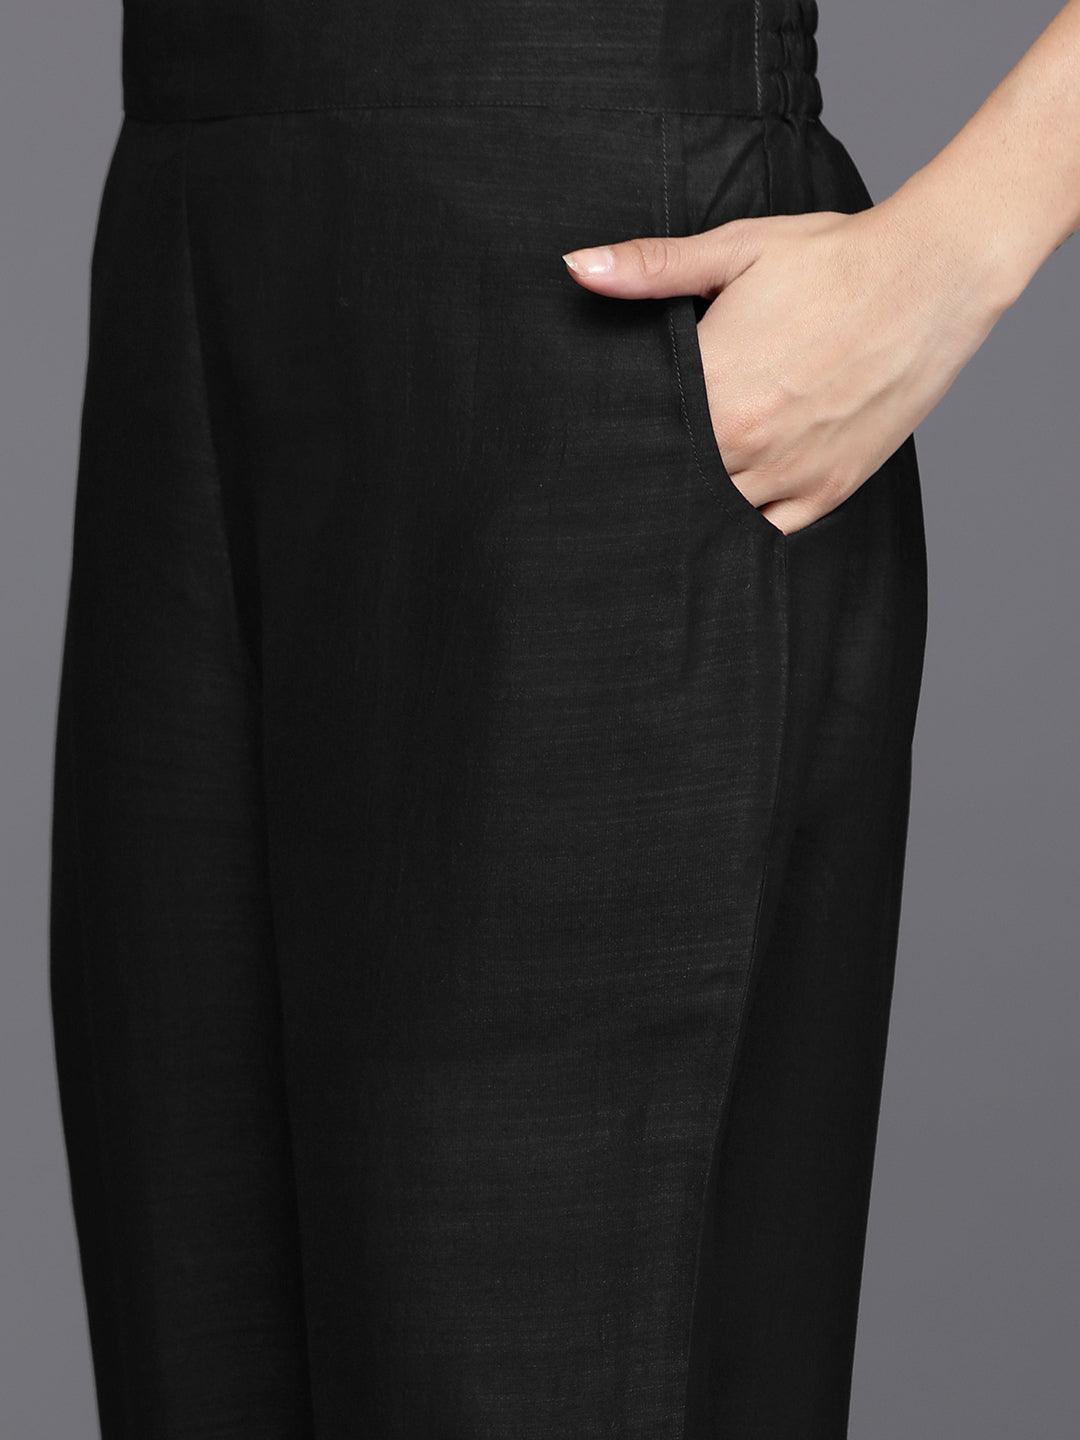 Black Yoke Design Silk Blend Straight Kurta With Trousers & Dupatta - Libas